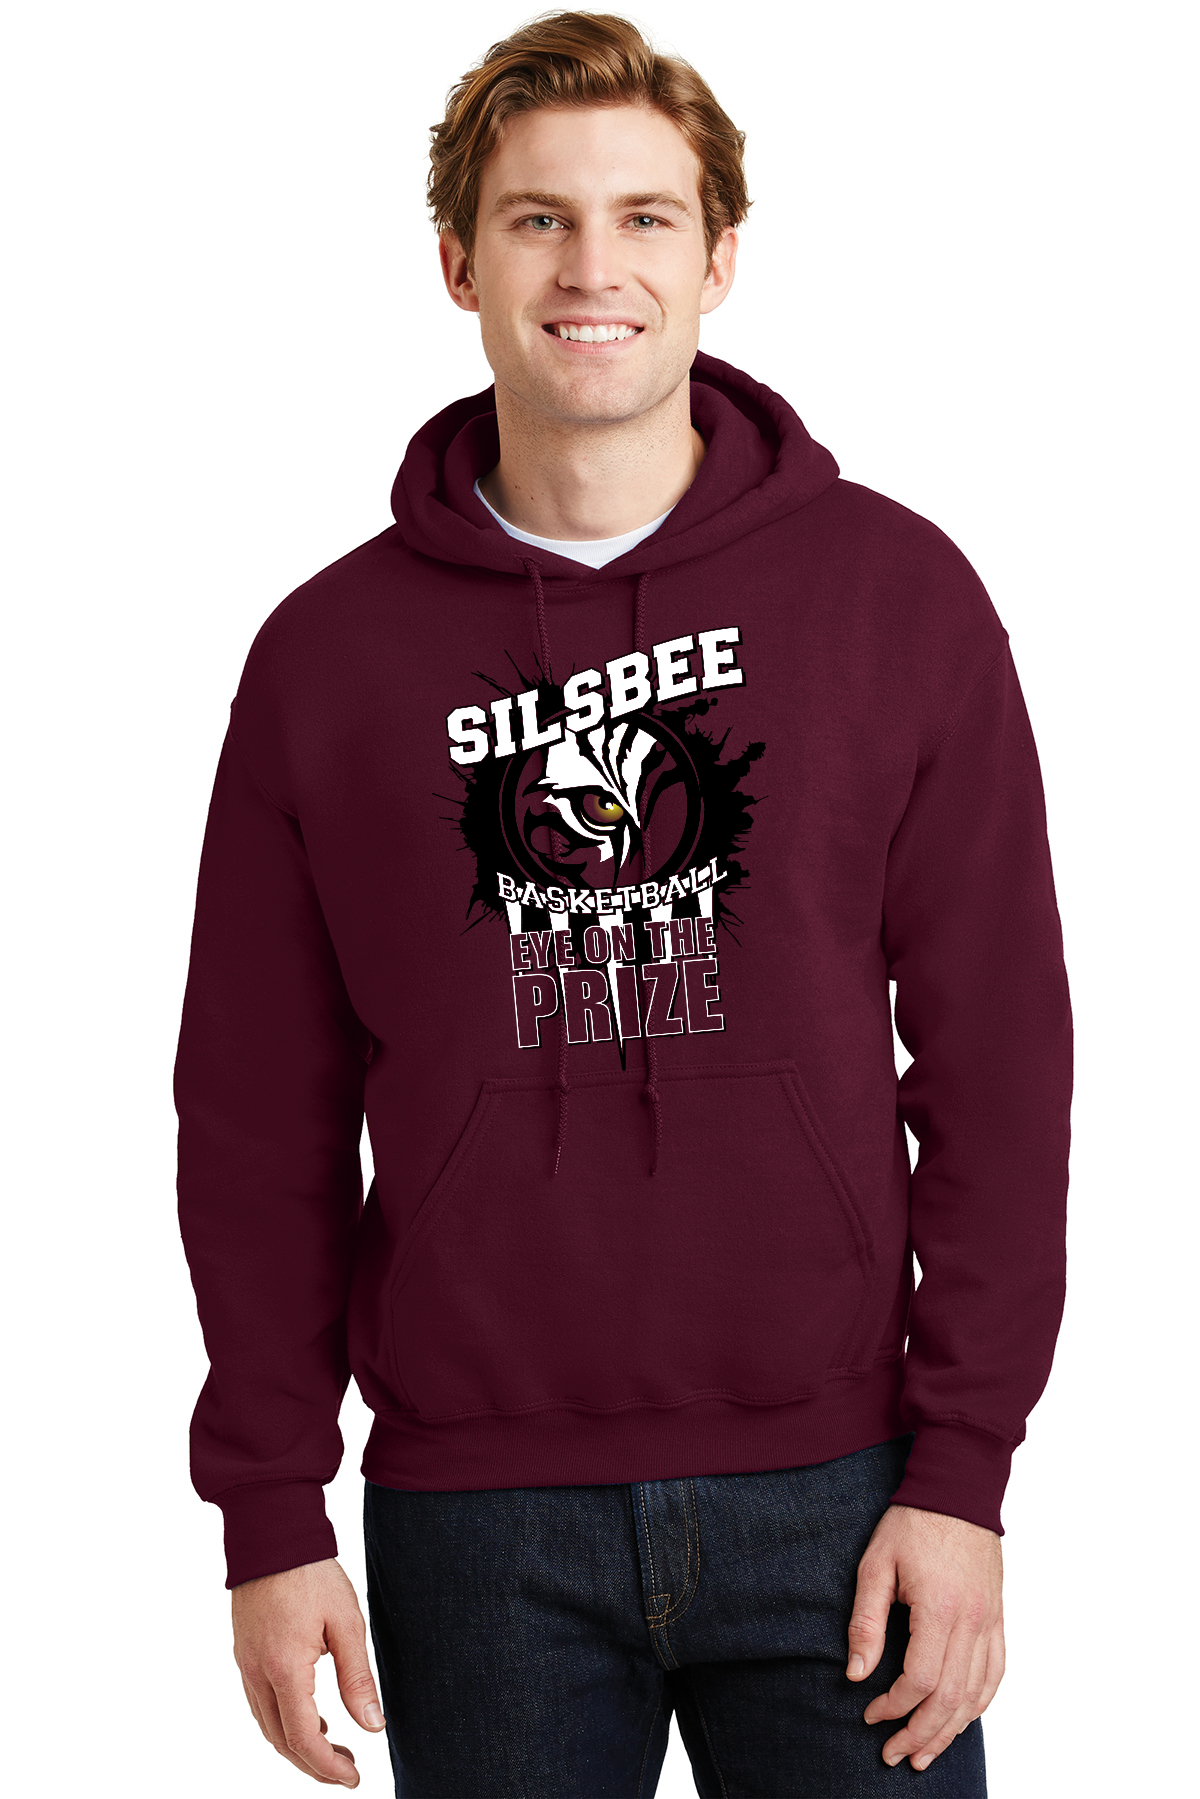 2019 Silsbee High School Basketball Adult T-Shirt/Hoodie